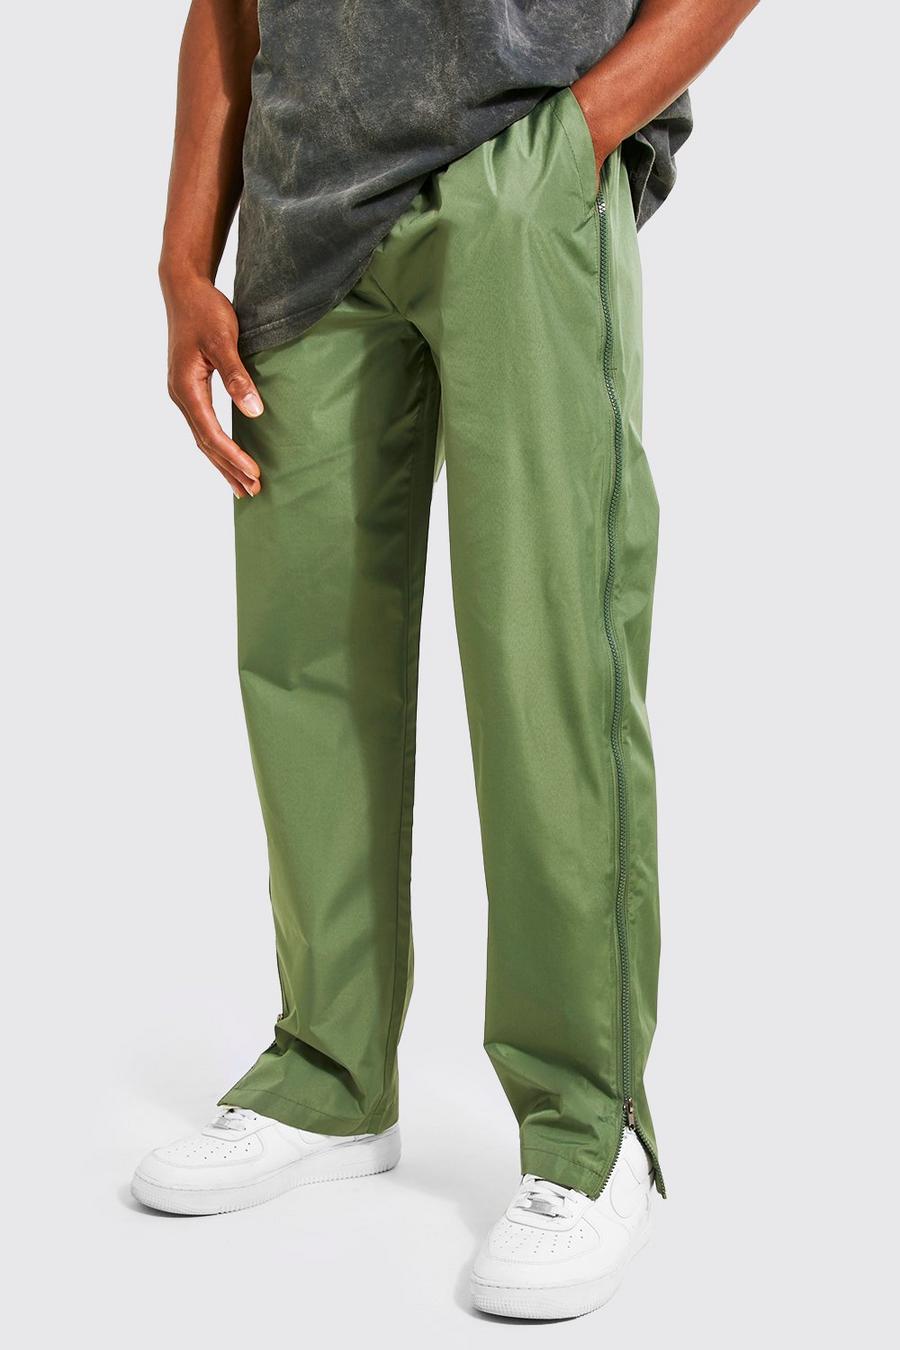 Pantaloni Man dritti con zip laterale, Light khaki caqui image number 1